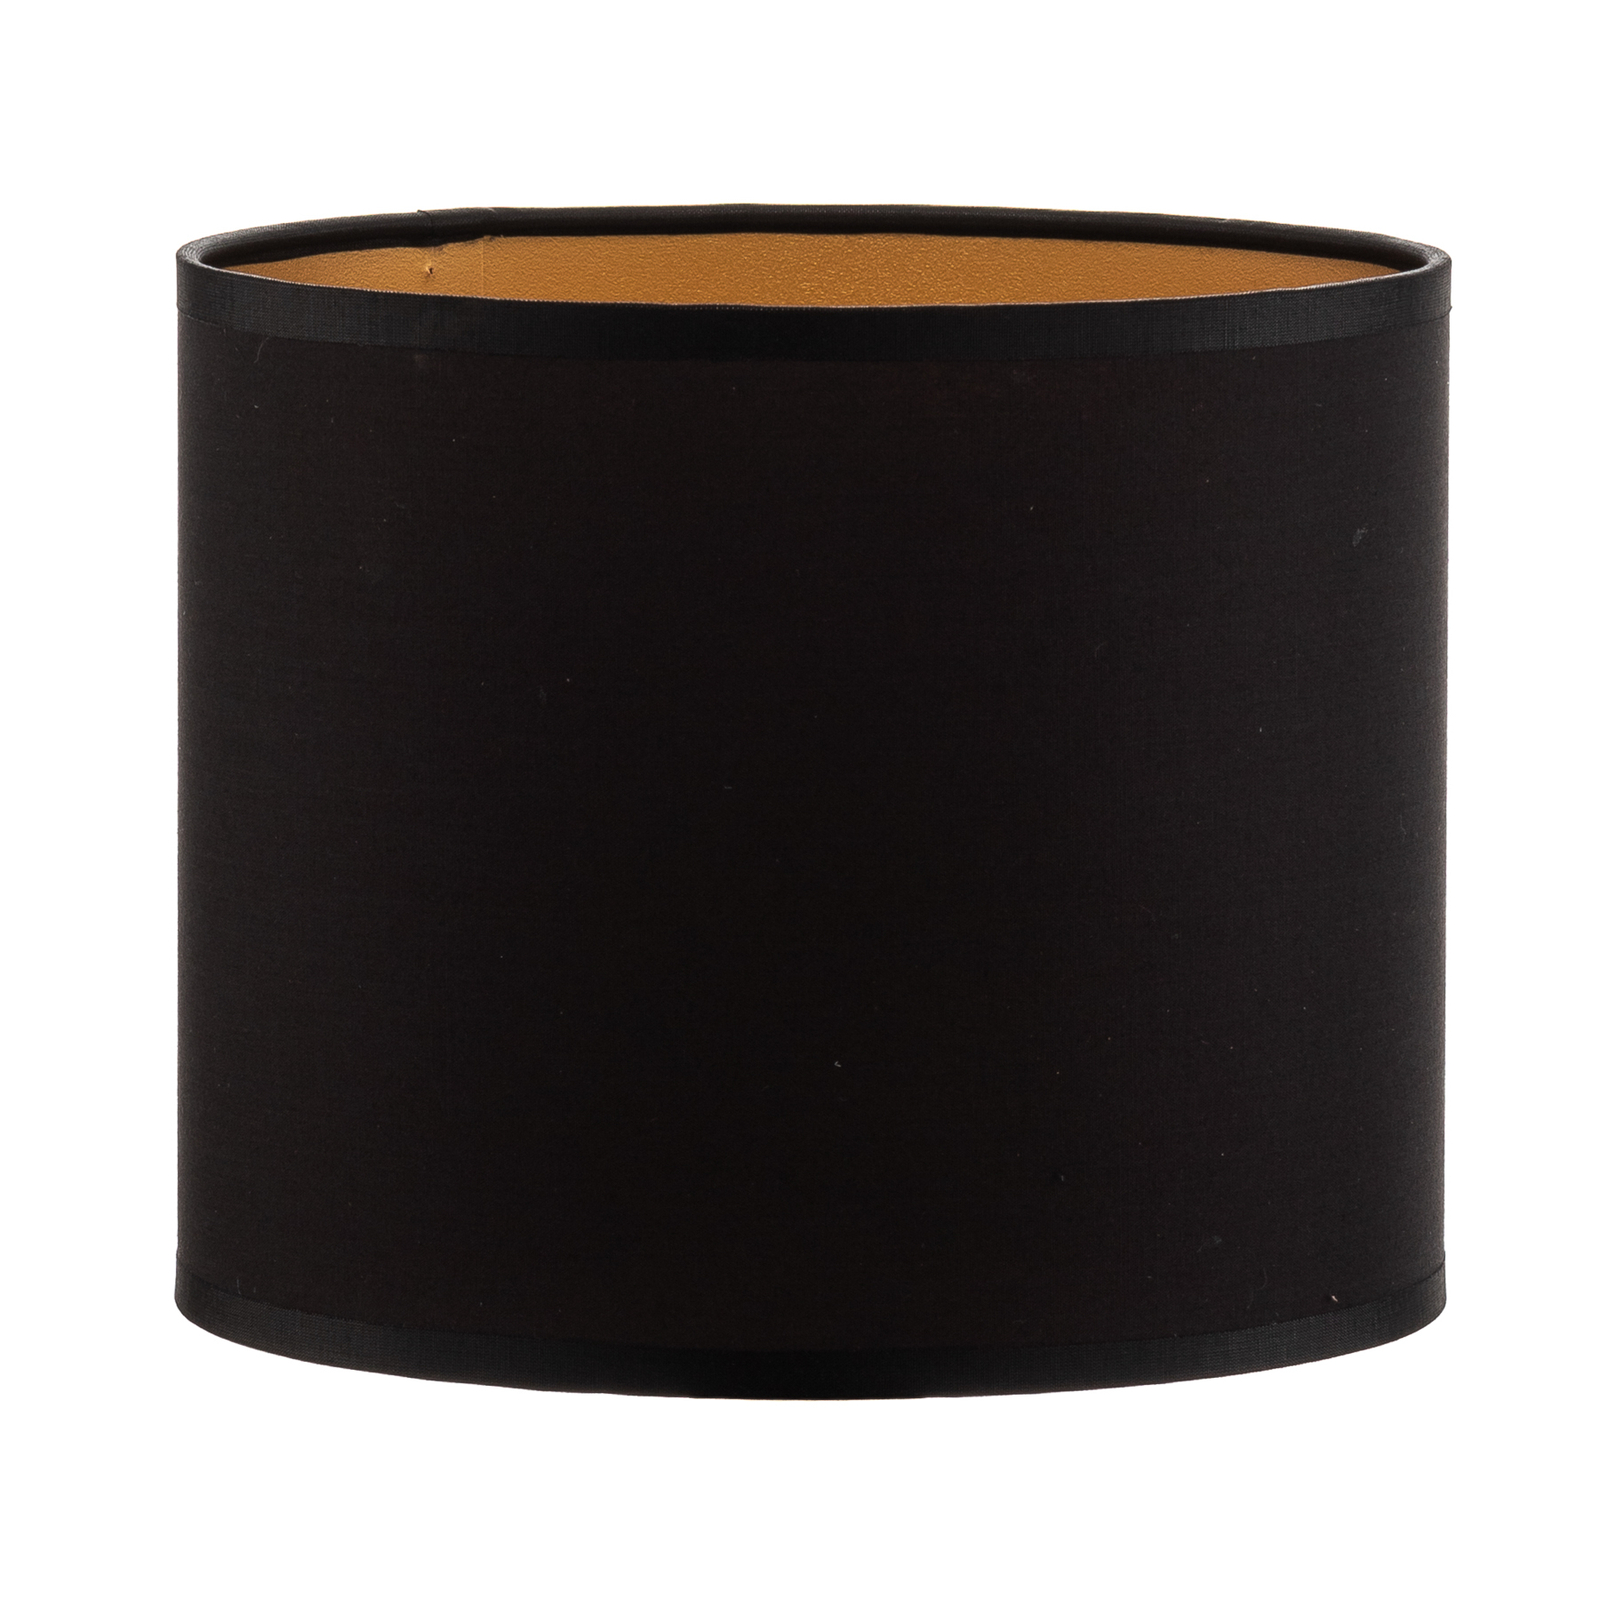 Lampshade Soho, black/gold, textile, Ø 18 cm